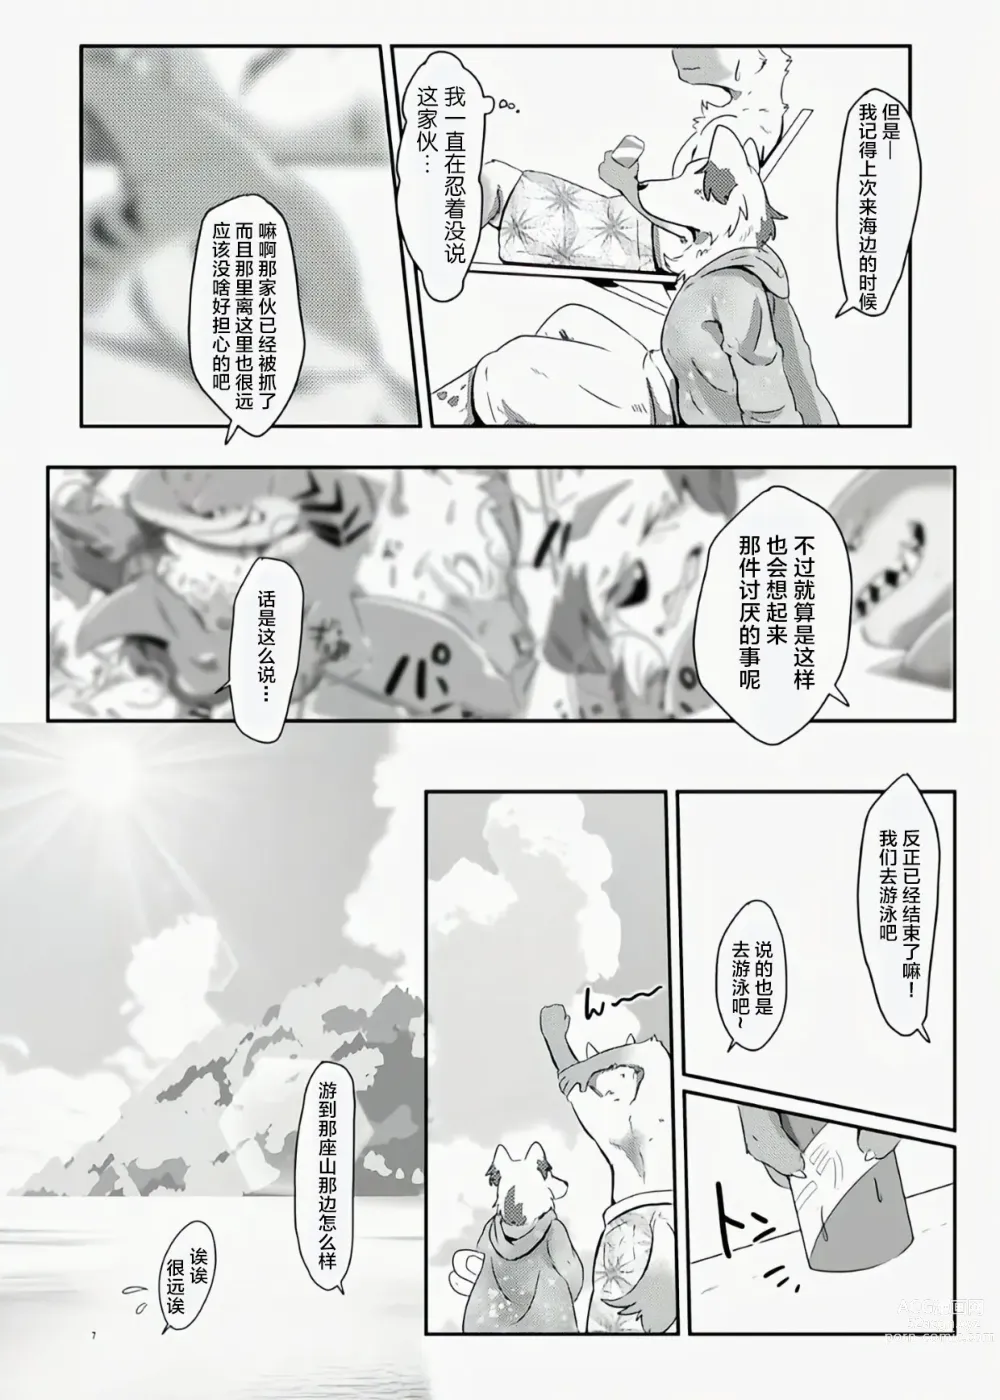 Page 6 of doujinshi 前方危险!!禁止入内!!REVERSE